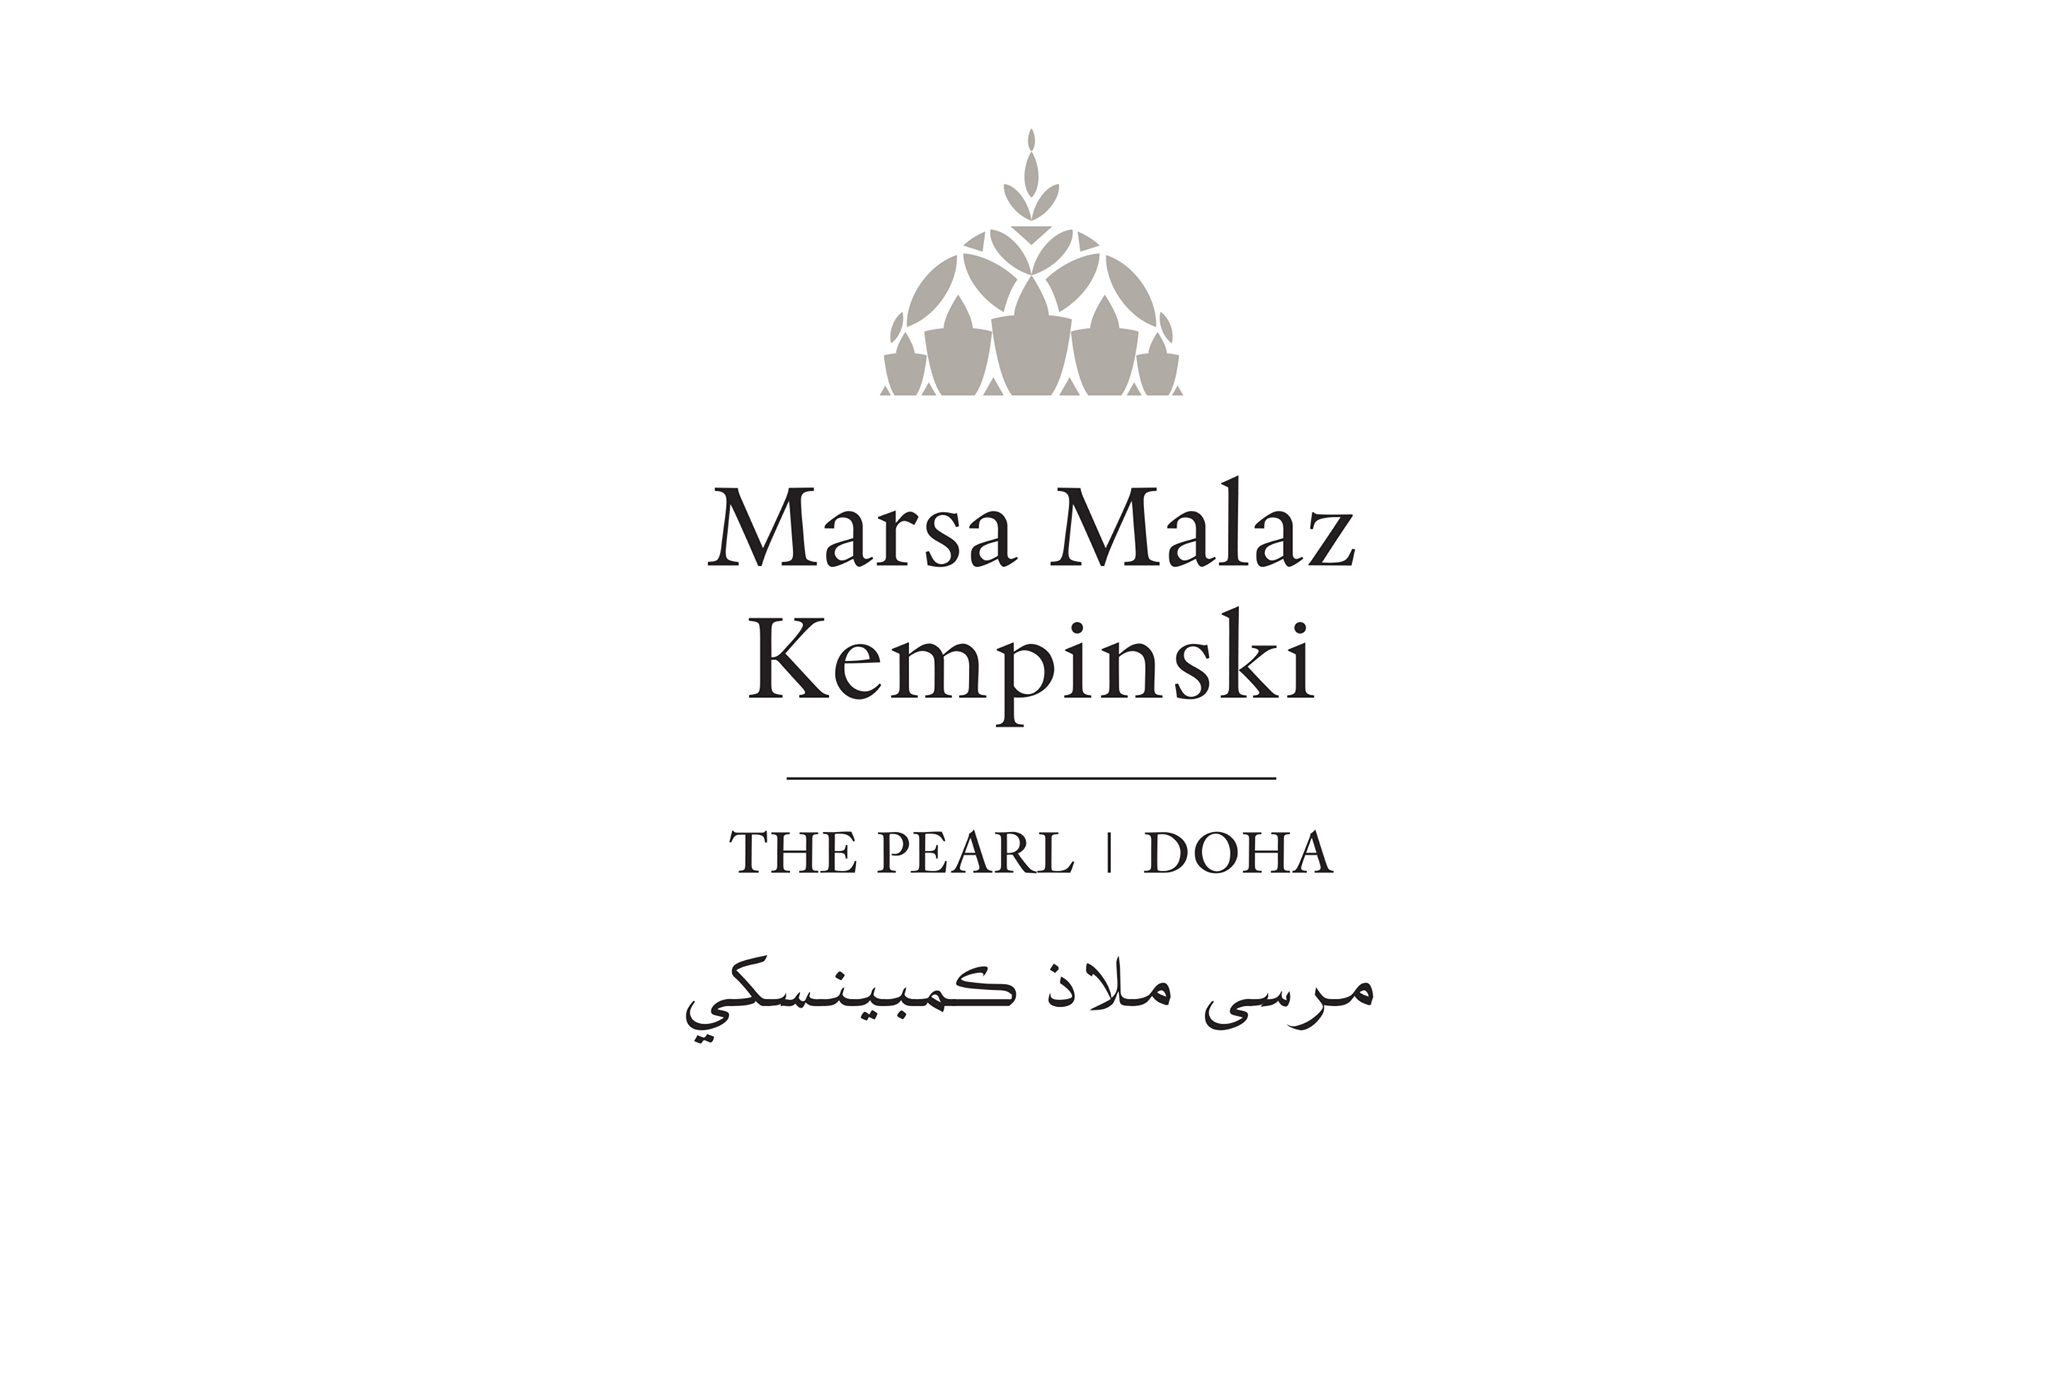 Image result for MARSA MALAZ KEMPINSKI, THE PEARL - DOHA